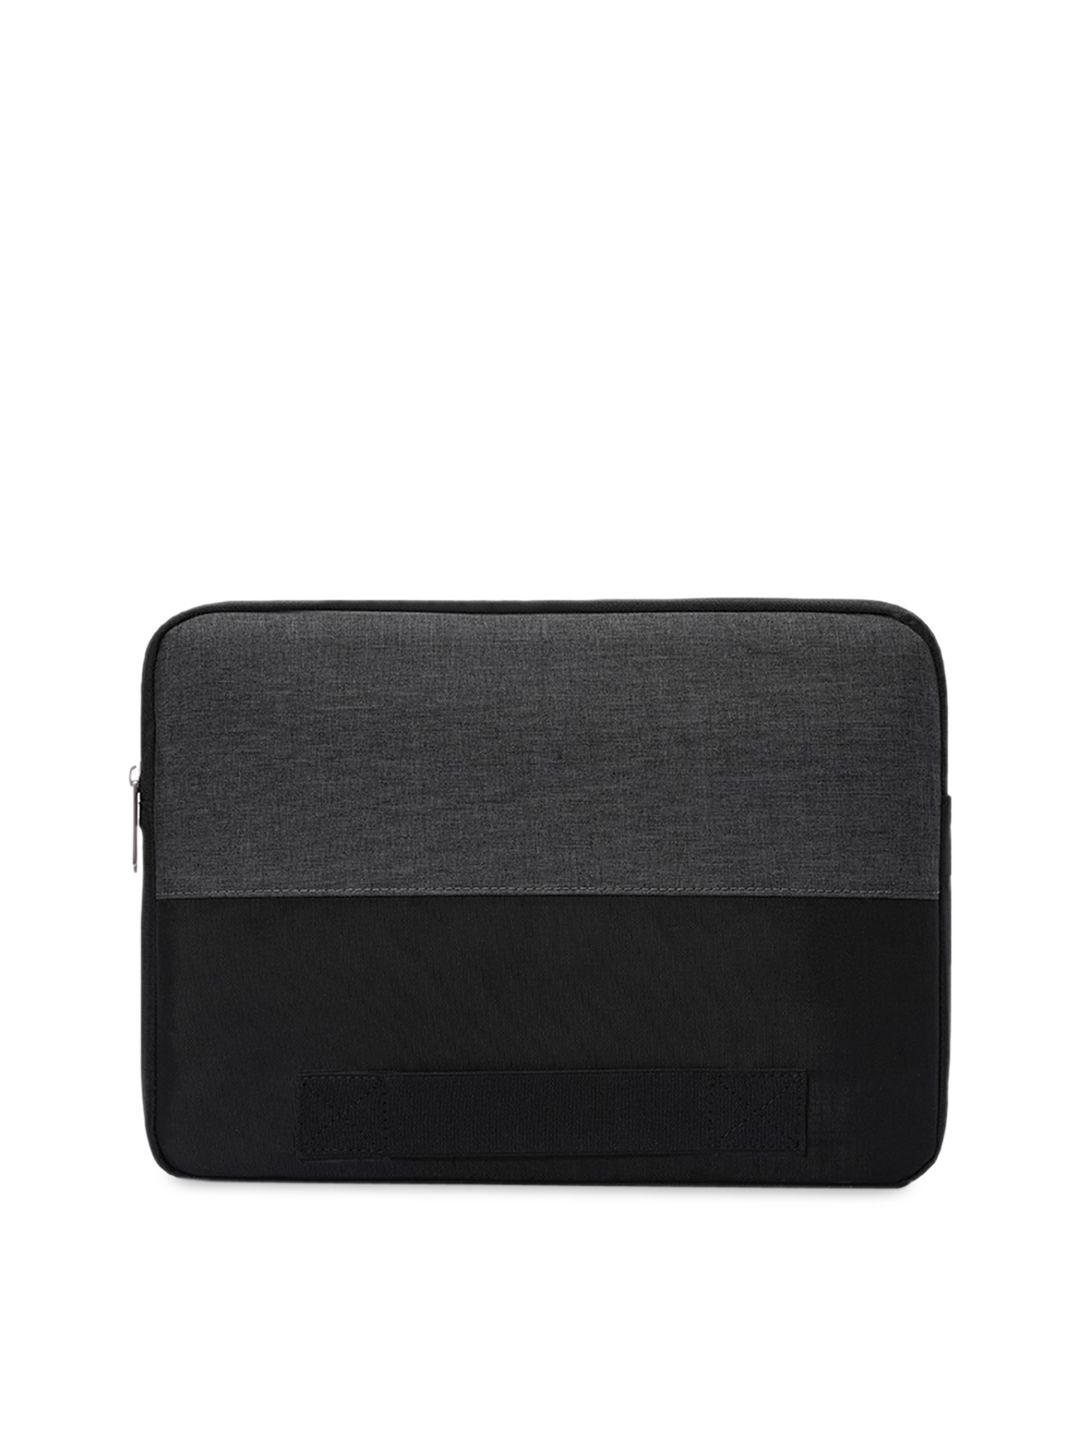 carriall unisex black & grey colourblocked 13 inch laptop sleeve